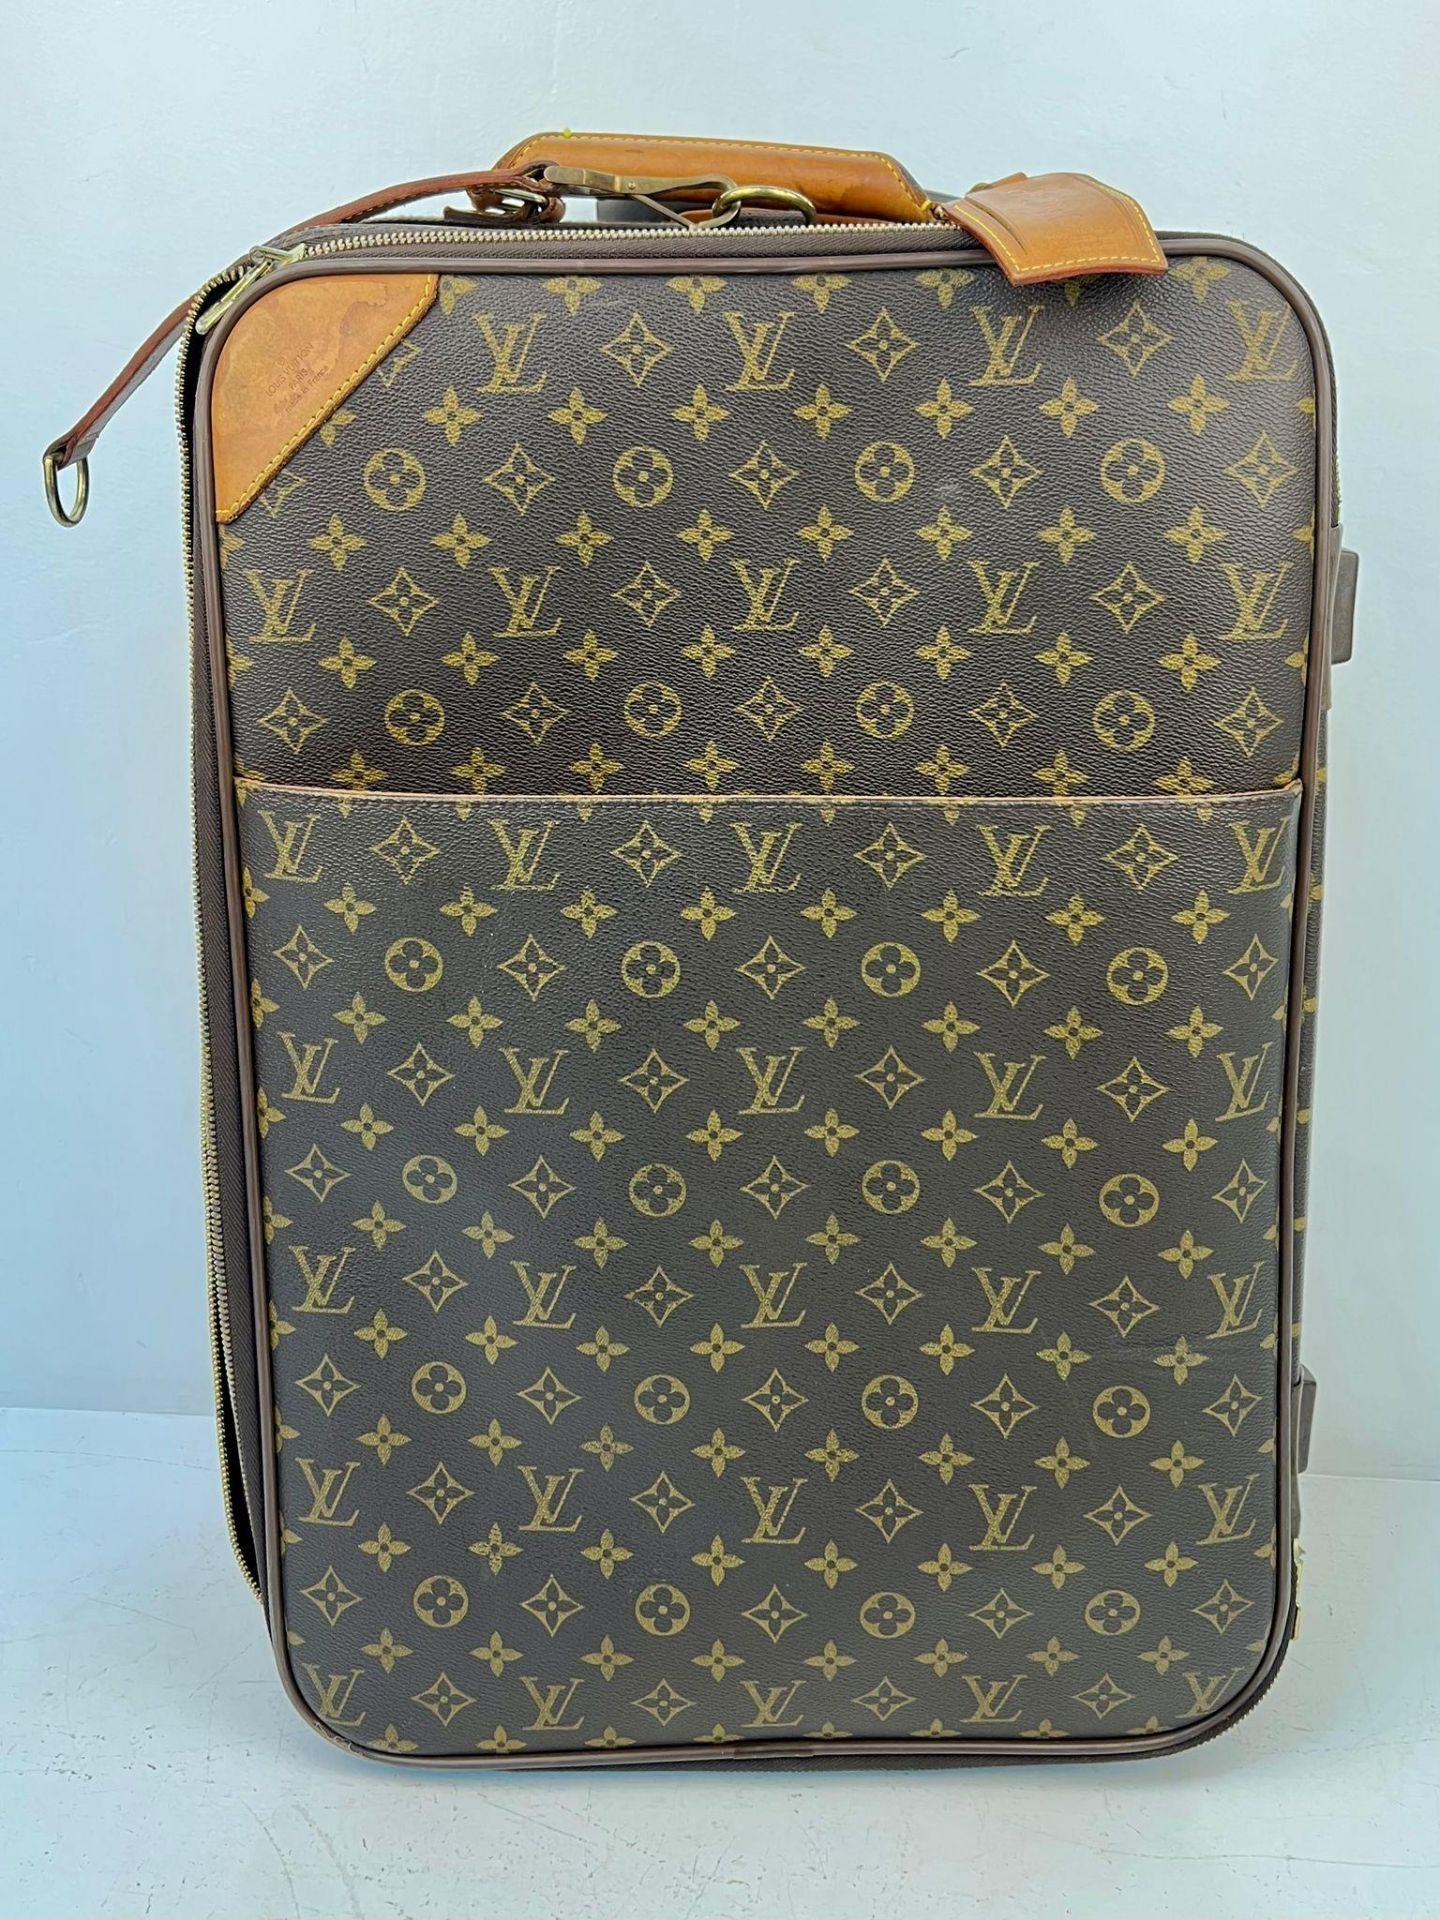 A Louis Vuitton Pegase Trolley Cabin Suitcase. Monogram LV canvas exterior with large open pocket.